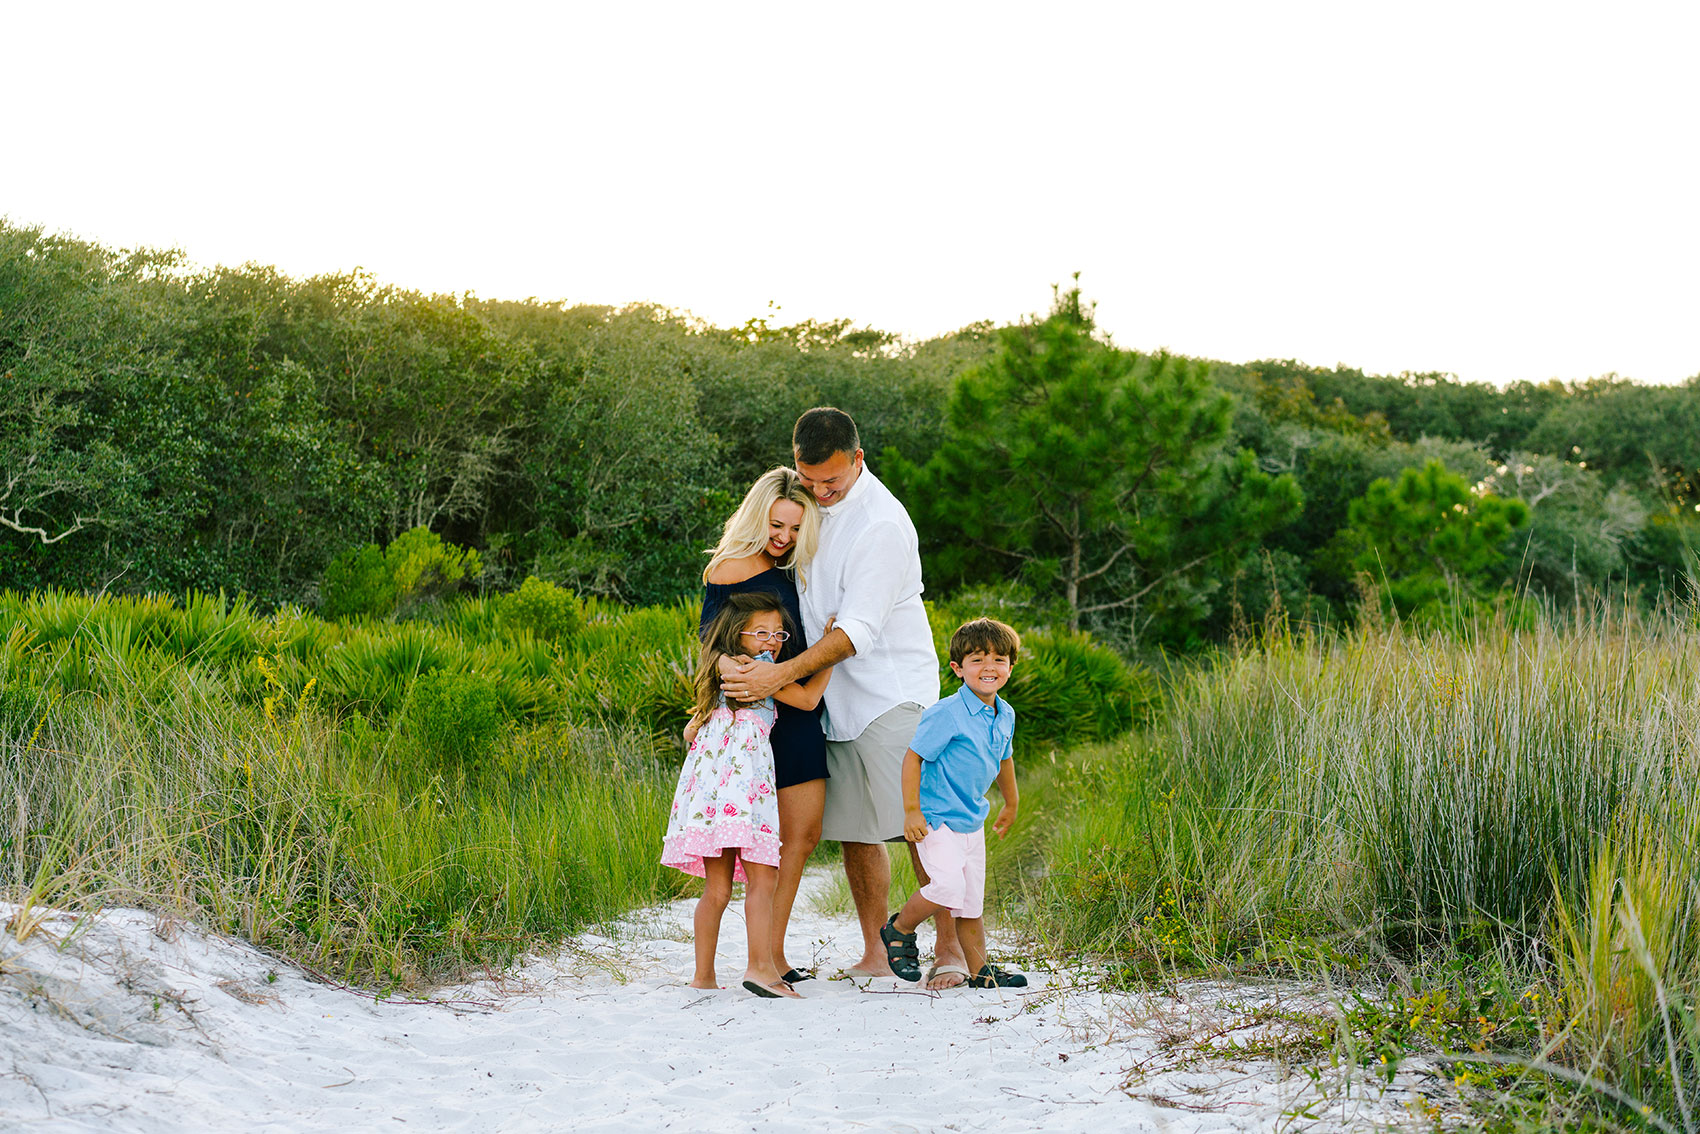 grayton beach family portraits outdoors